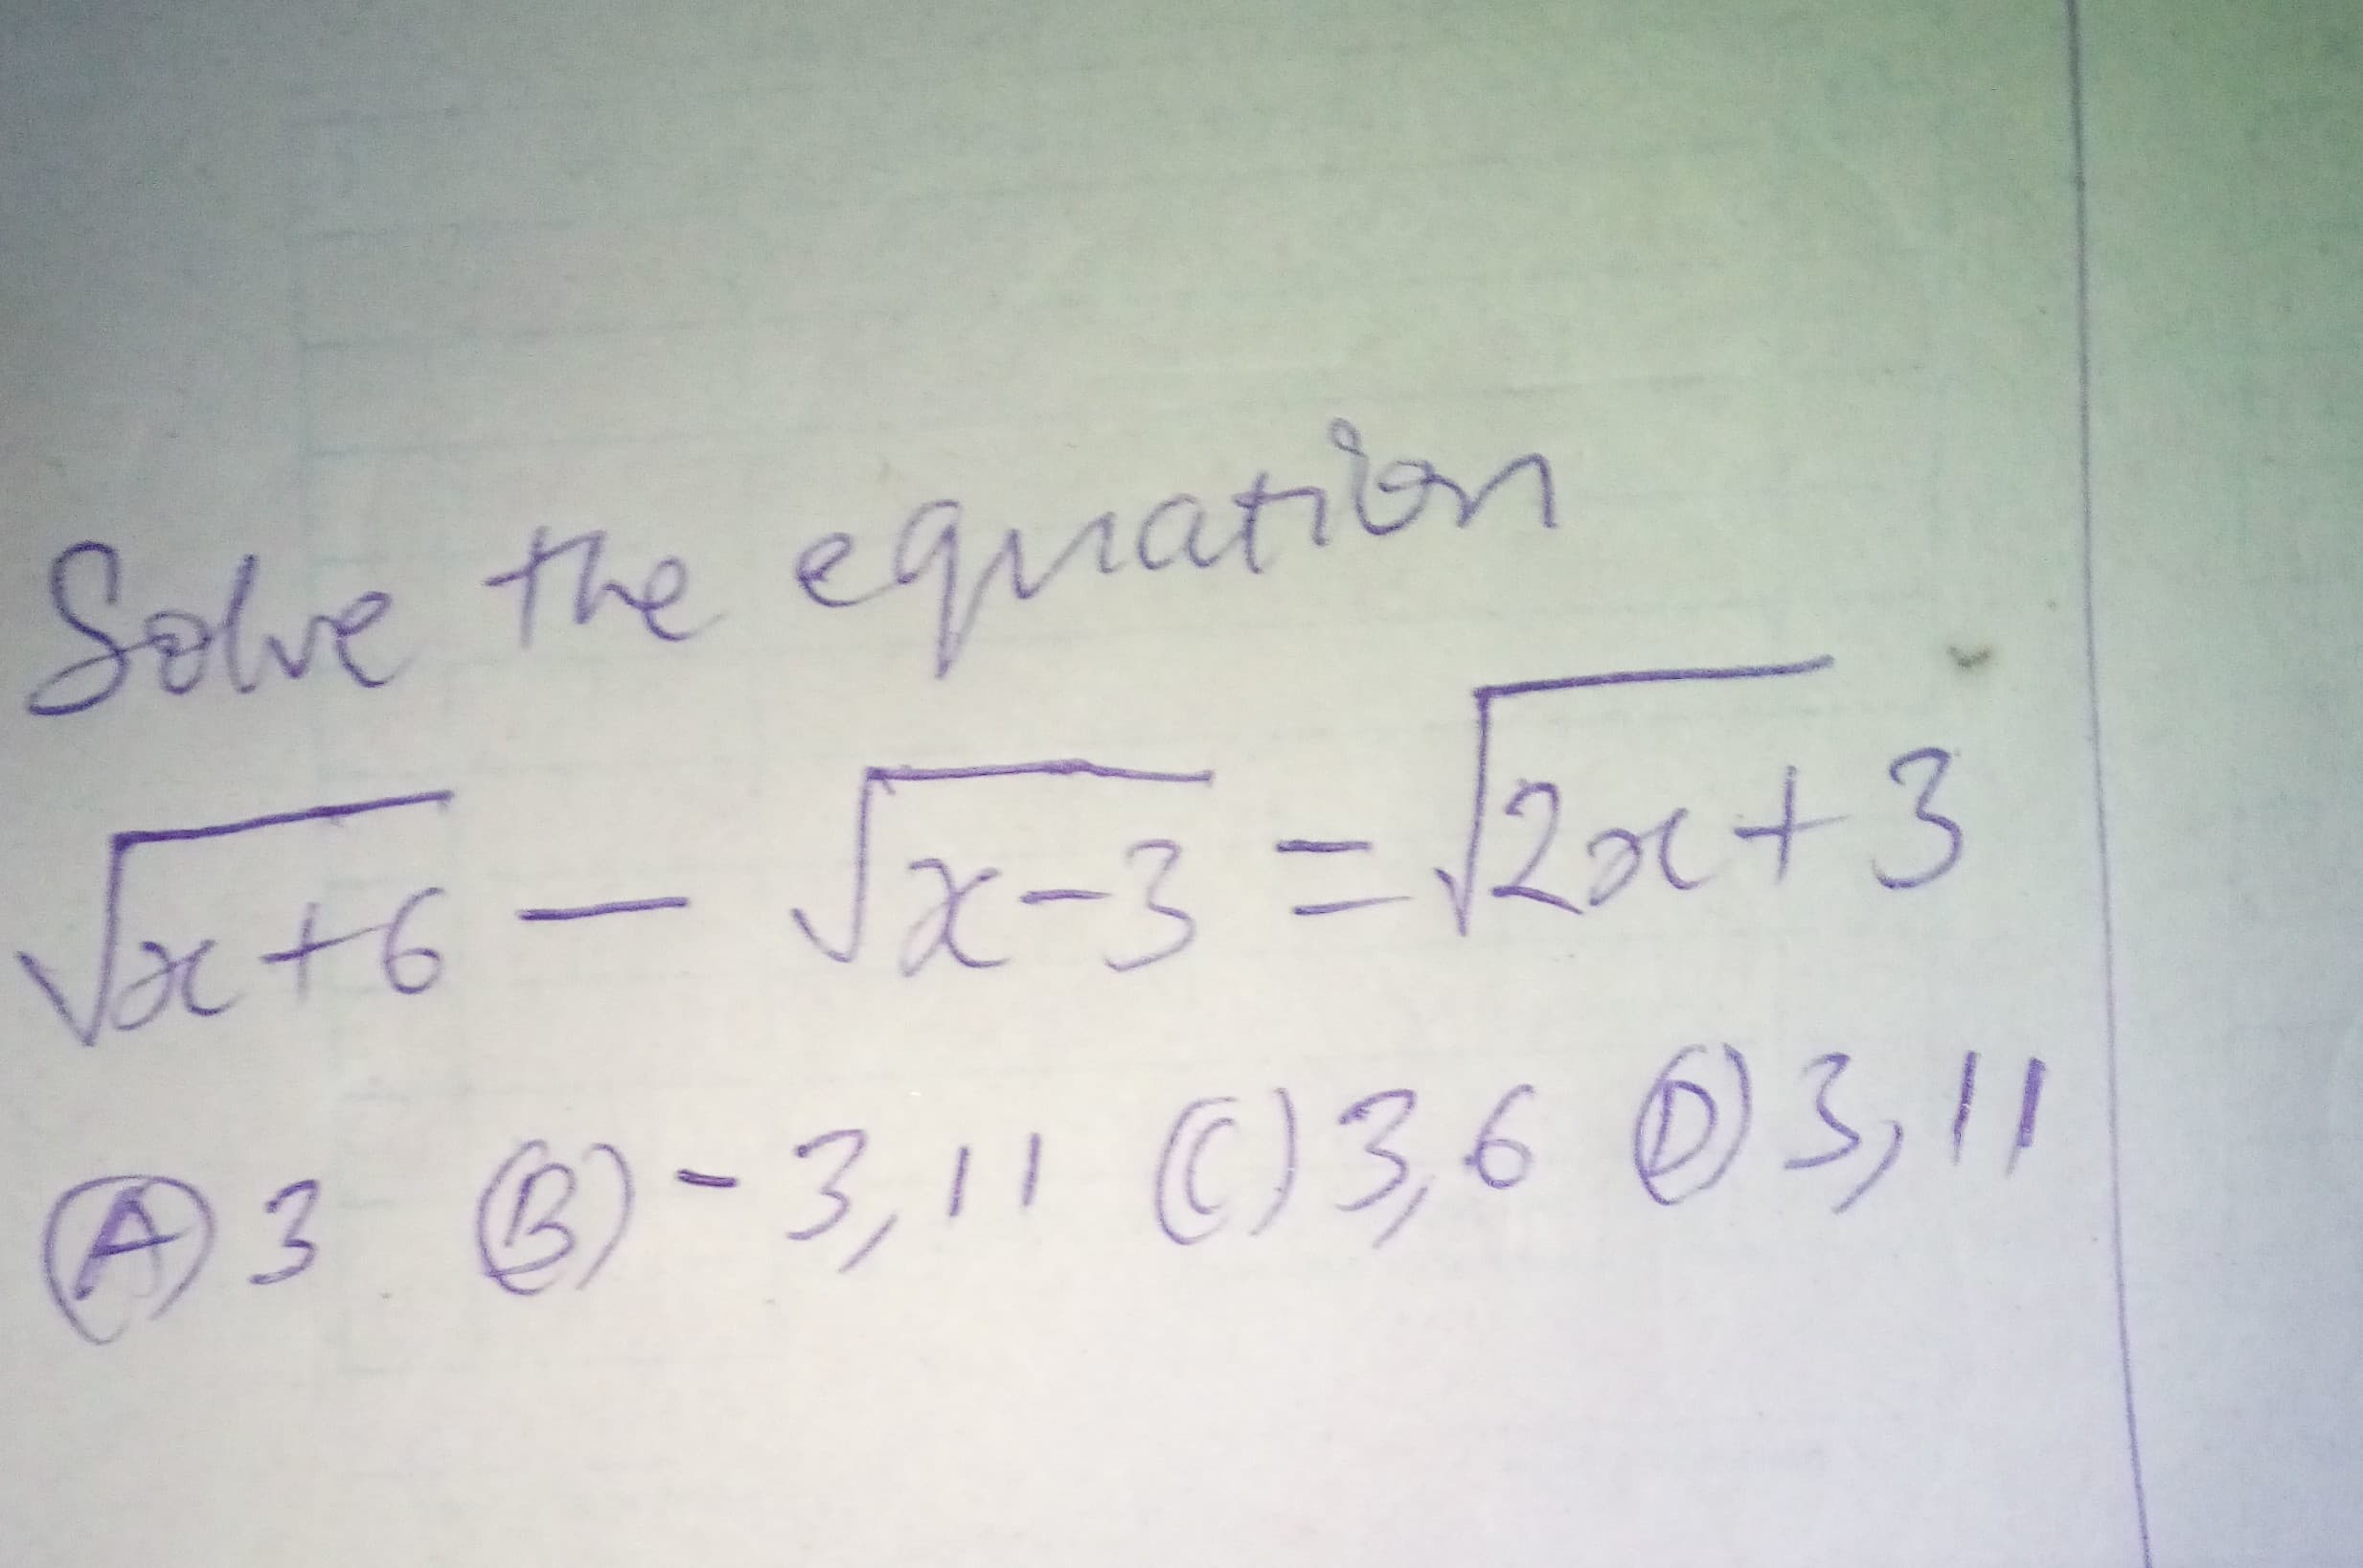 Selve the equatie
et6-Jマ-3=っく+3
20c+3
A3 B-3,11 036 03,11
